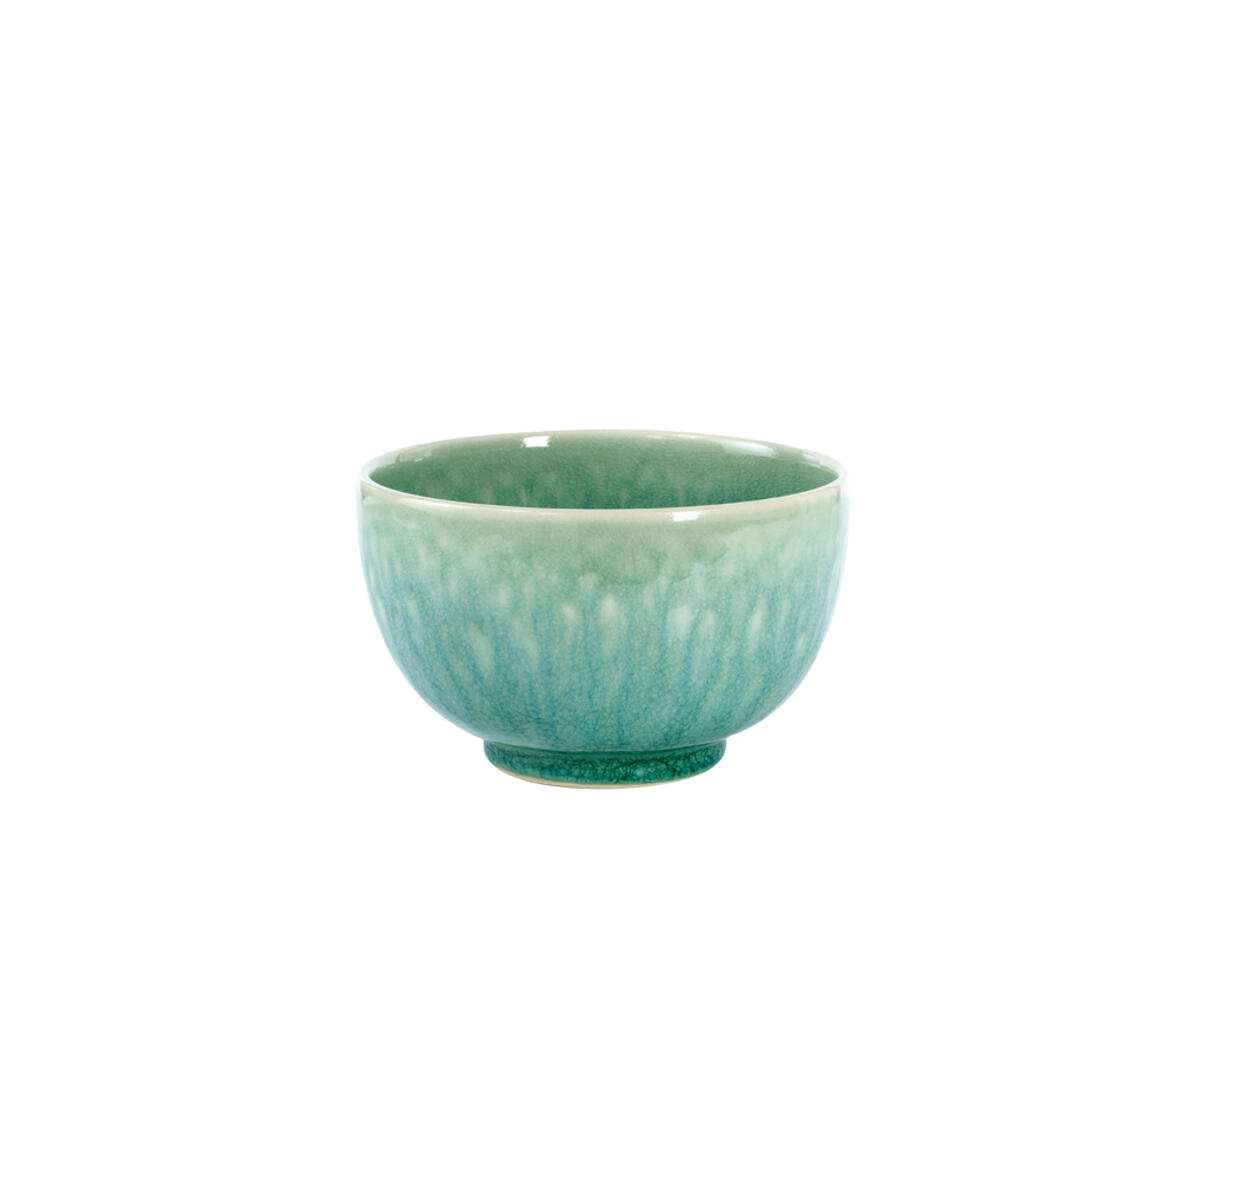 bowl s tourron jade ceramic manufacturer